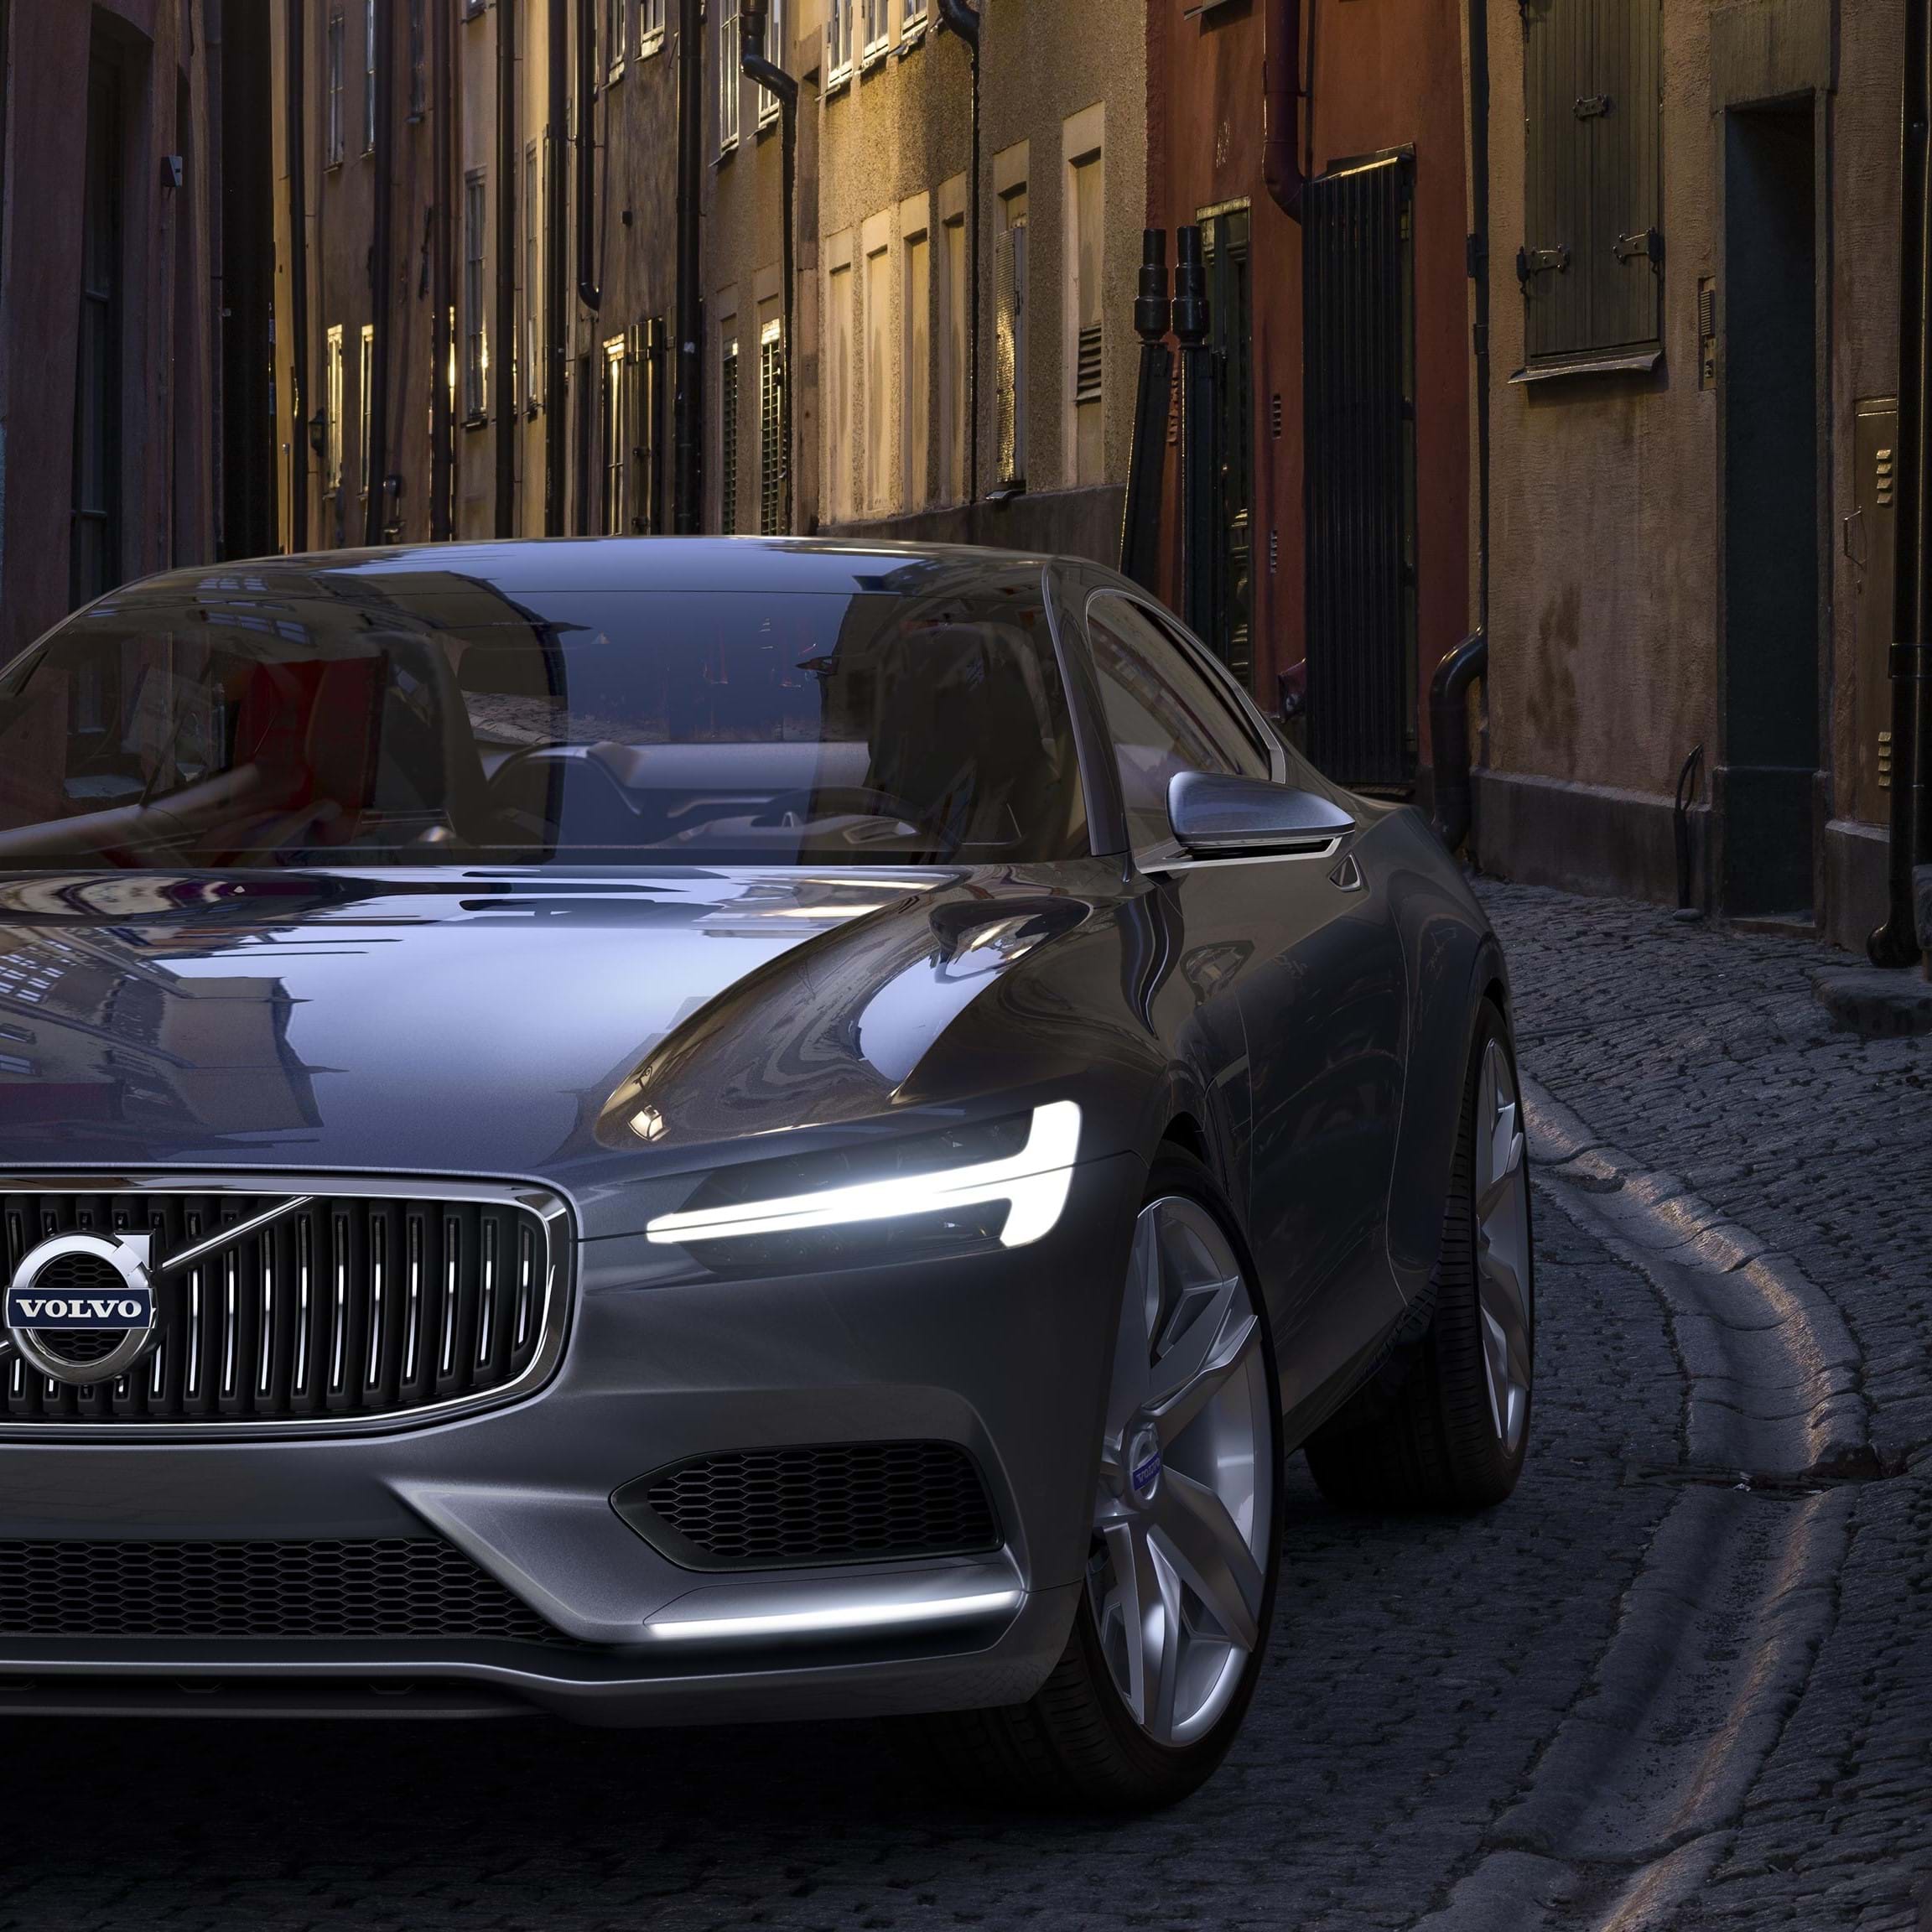 Volvo Concept Coupe אפור נוסע ברחוב עירוני מרוצף באבן